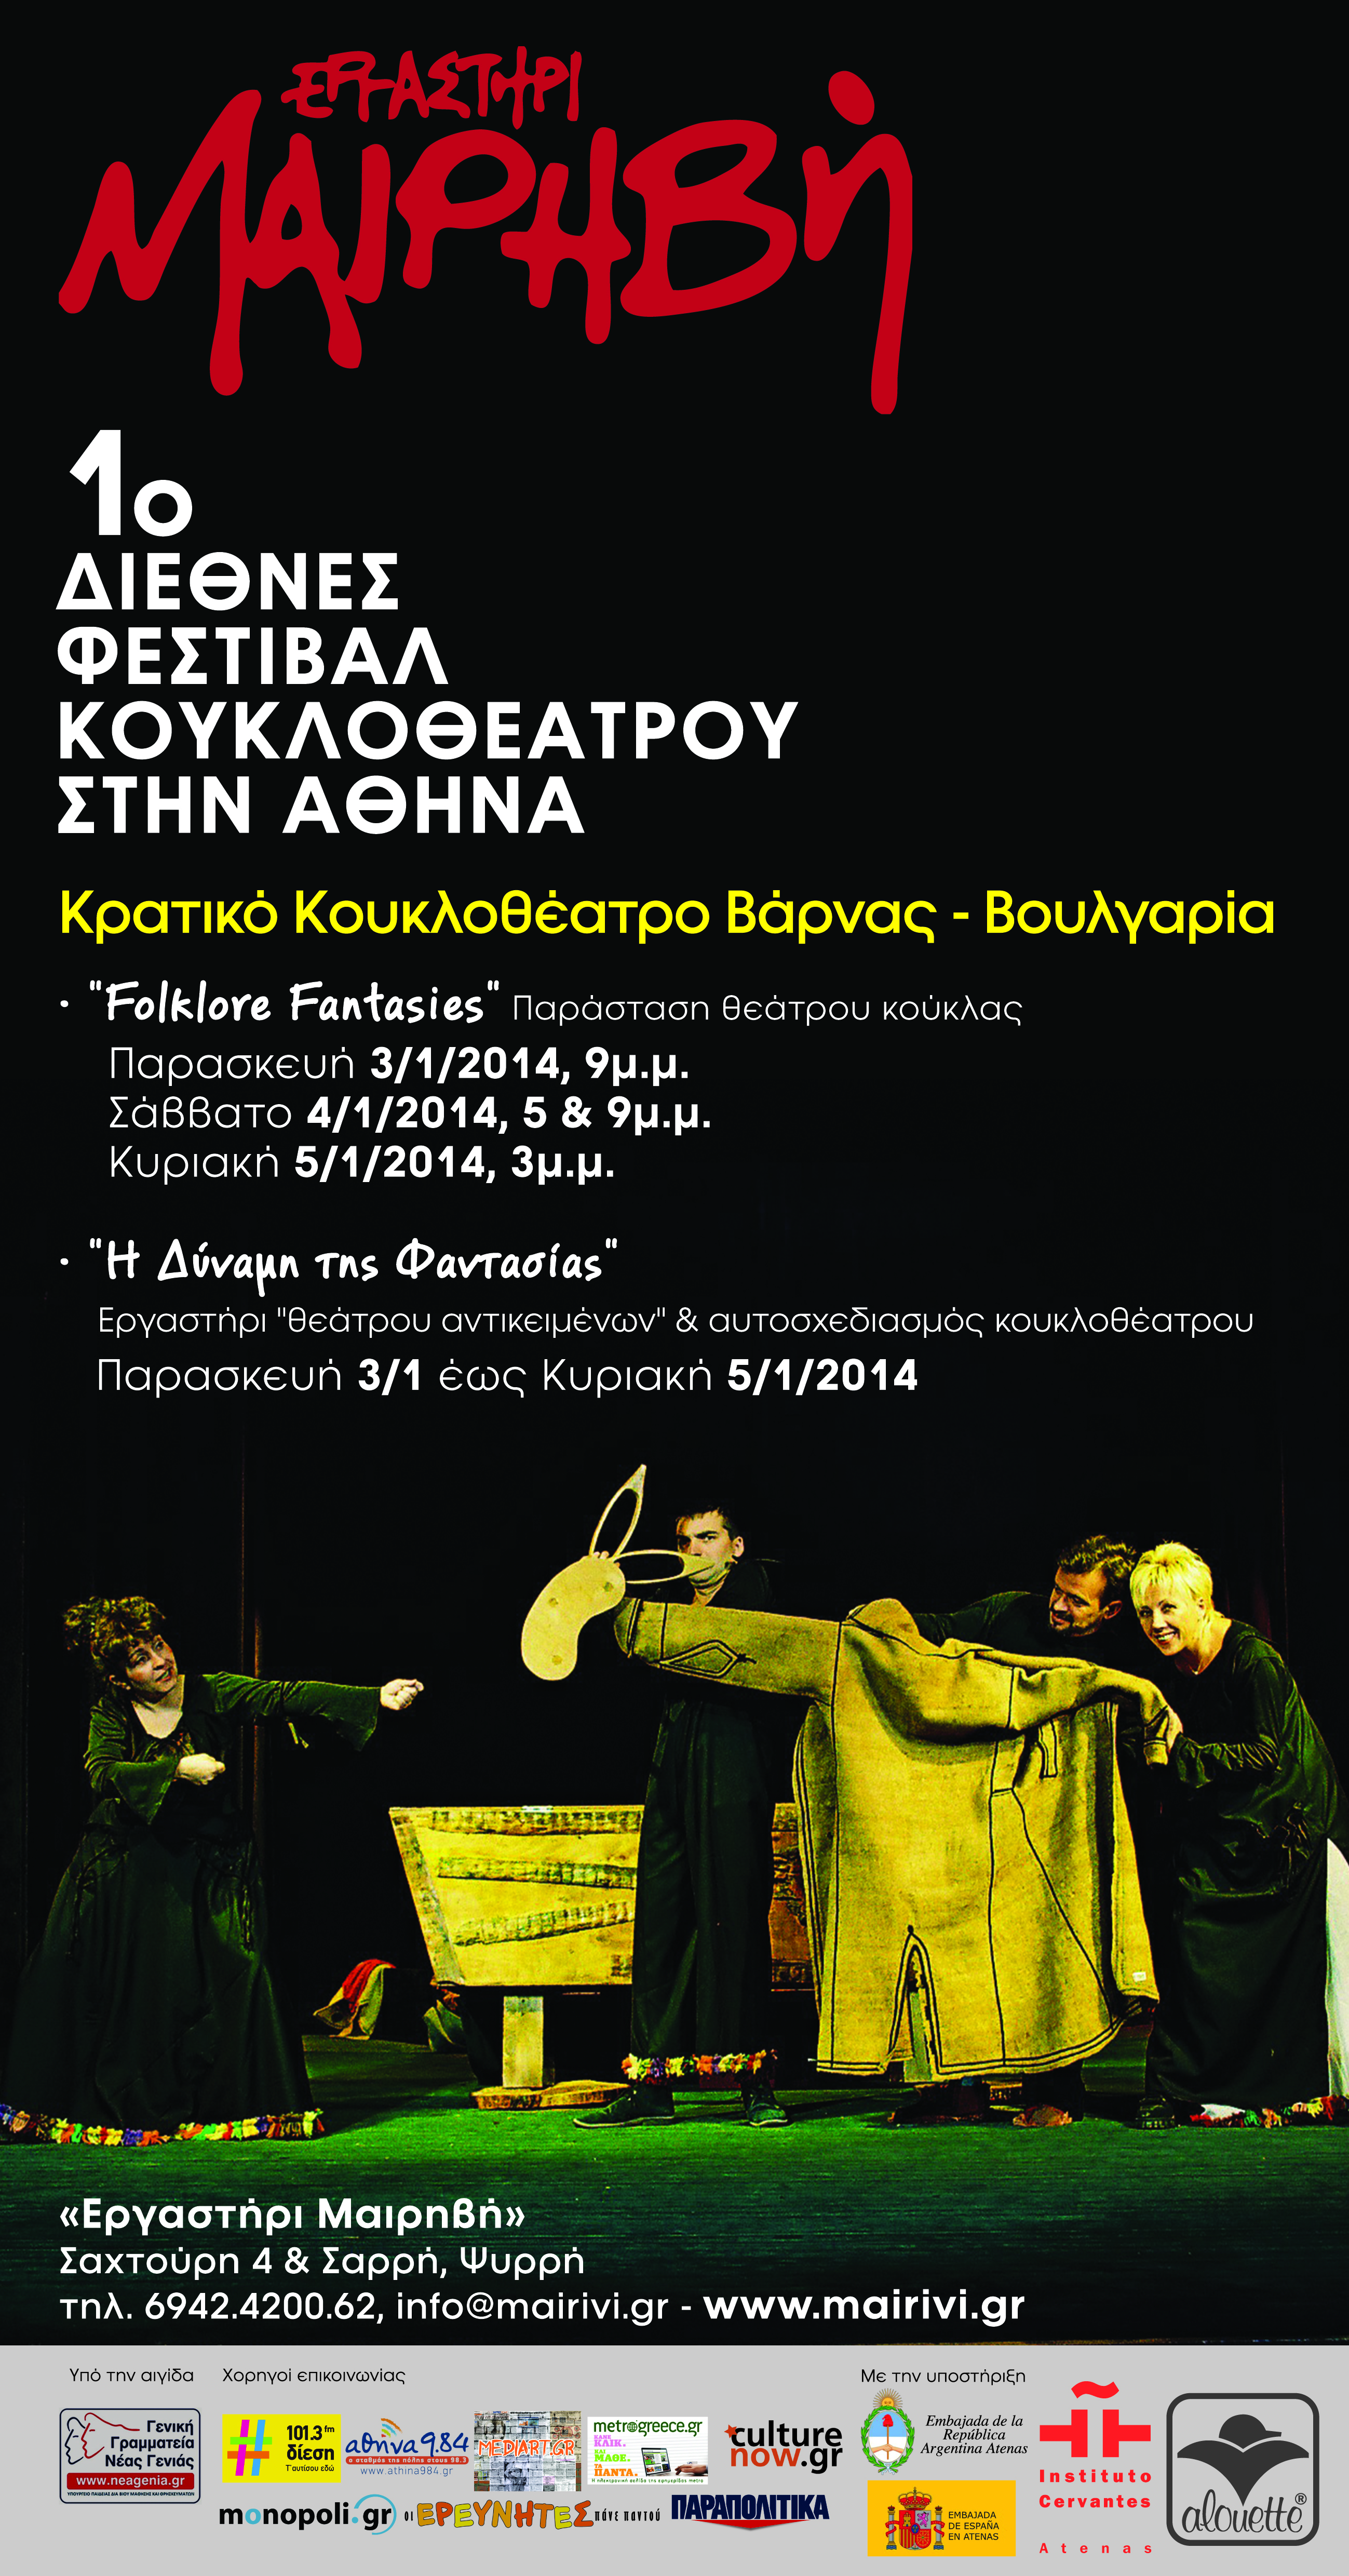 1o Διεθνές Φεστιβάλ Κουκλοθέατρου και Αφήγησης στην Αθήνα (Νοέμβριος 2013 - Μάιος 2014)